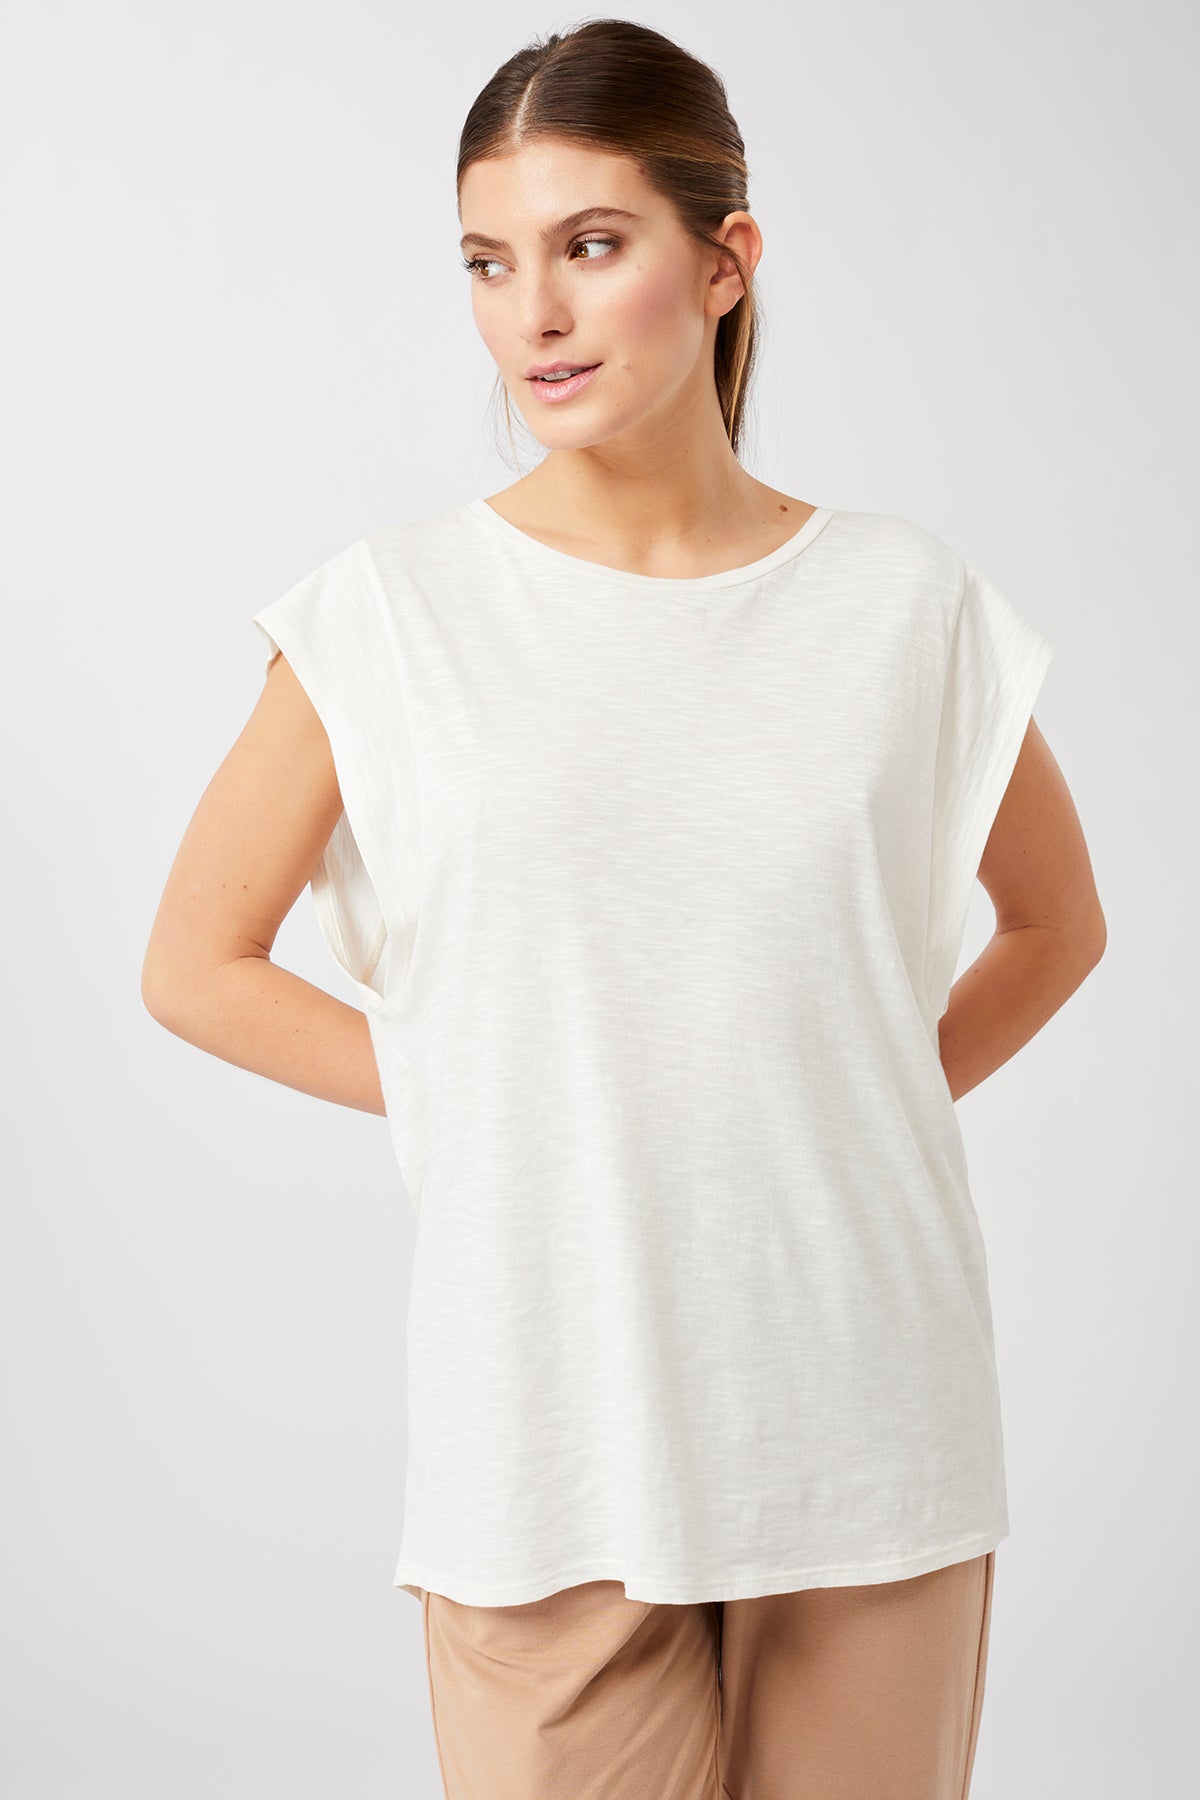  Mandala Yoga Shirt Weiß Front - Off Duty Top